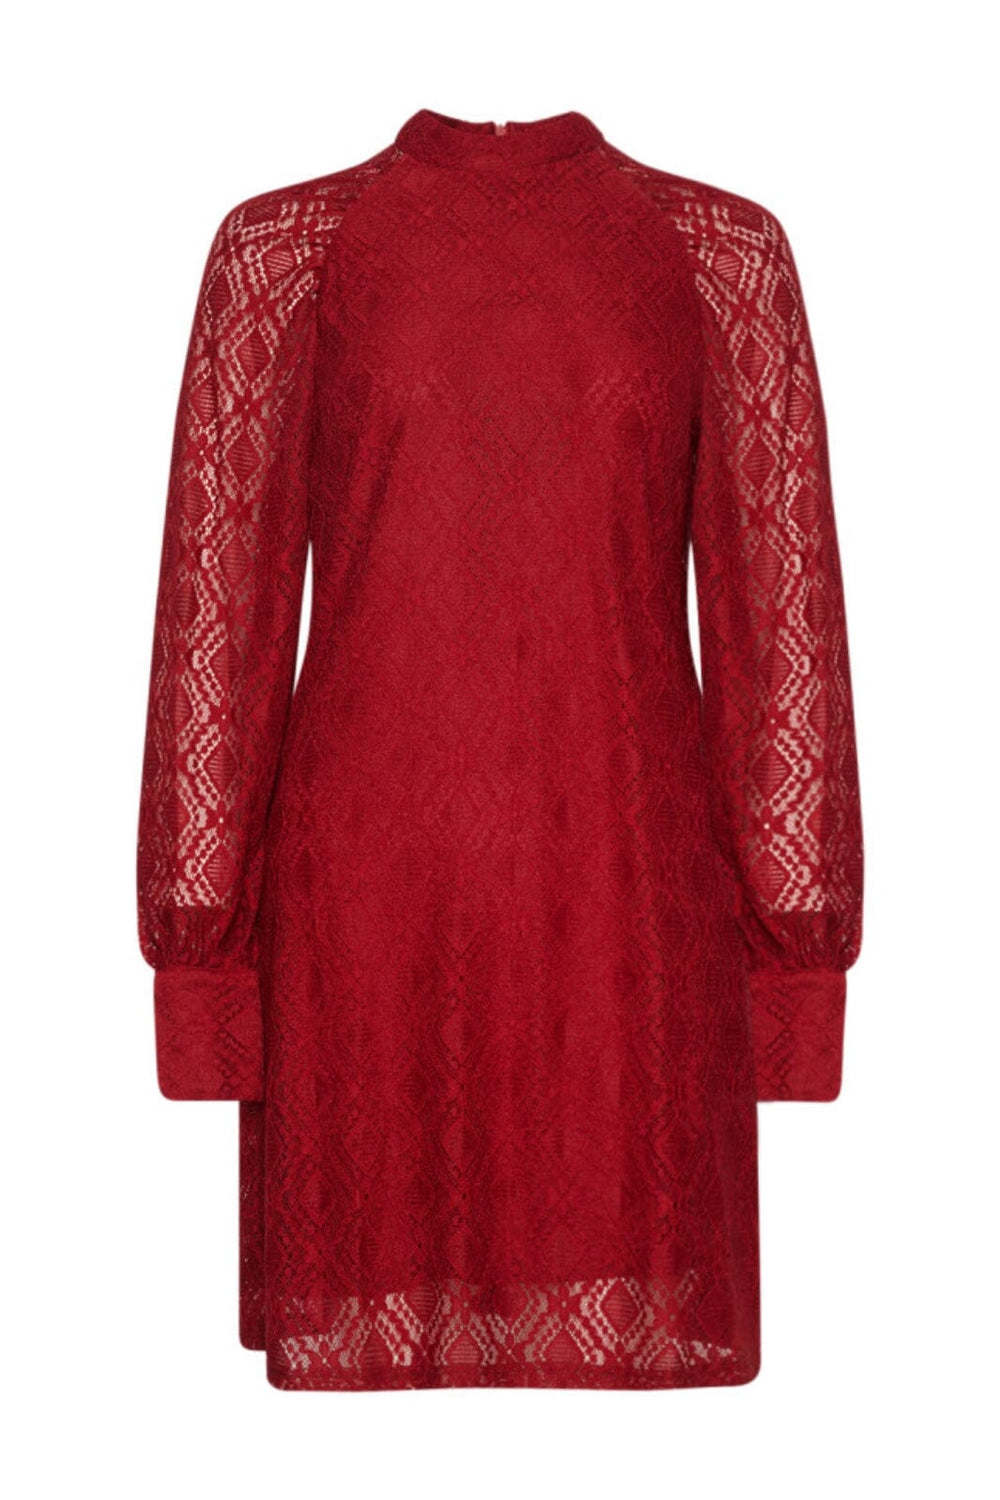 Noella - Texas Lace Dress - 014 Red Kjoler 